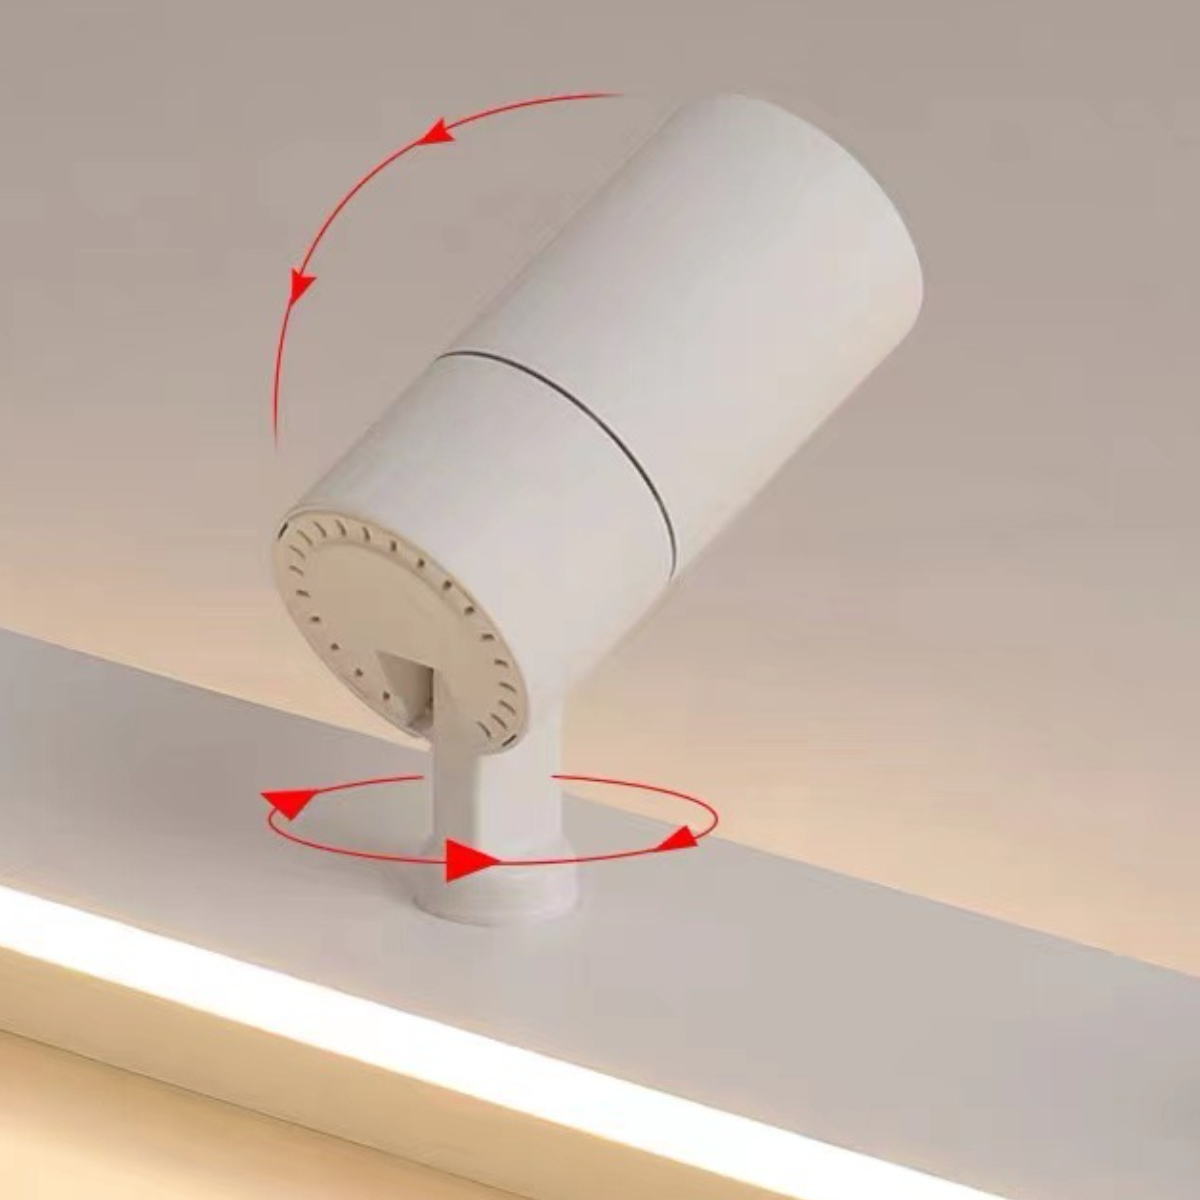 LED-Lampe beleuchten UWOT mehrfarbig Leuchten Dreifarbige LED-Schienenstrahler: perfekt Innenkorridore